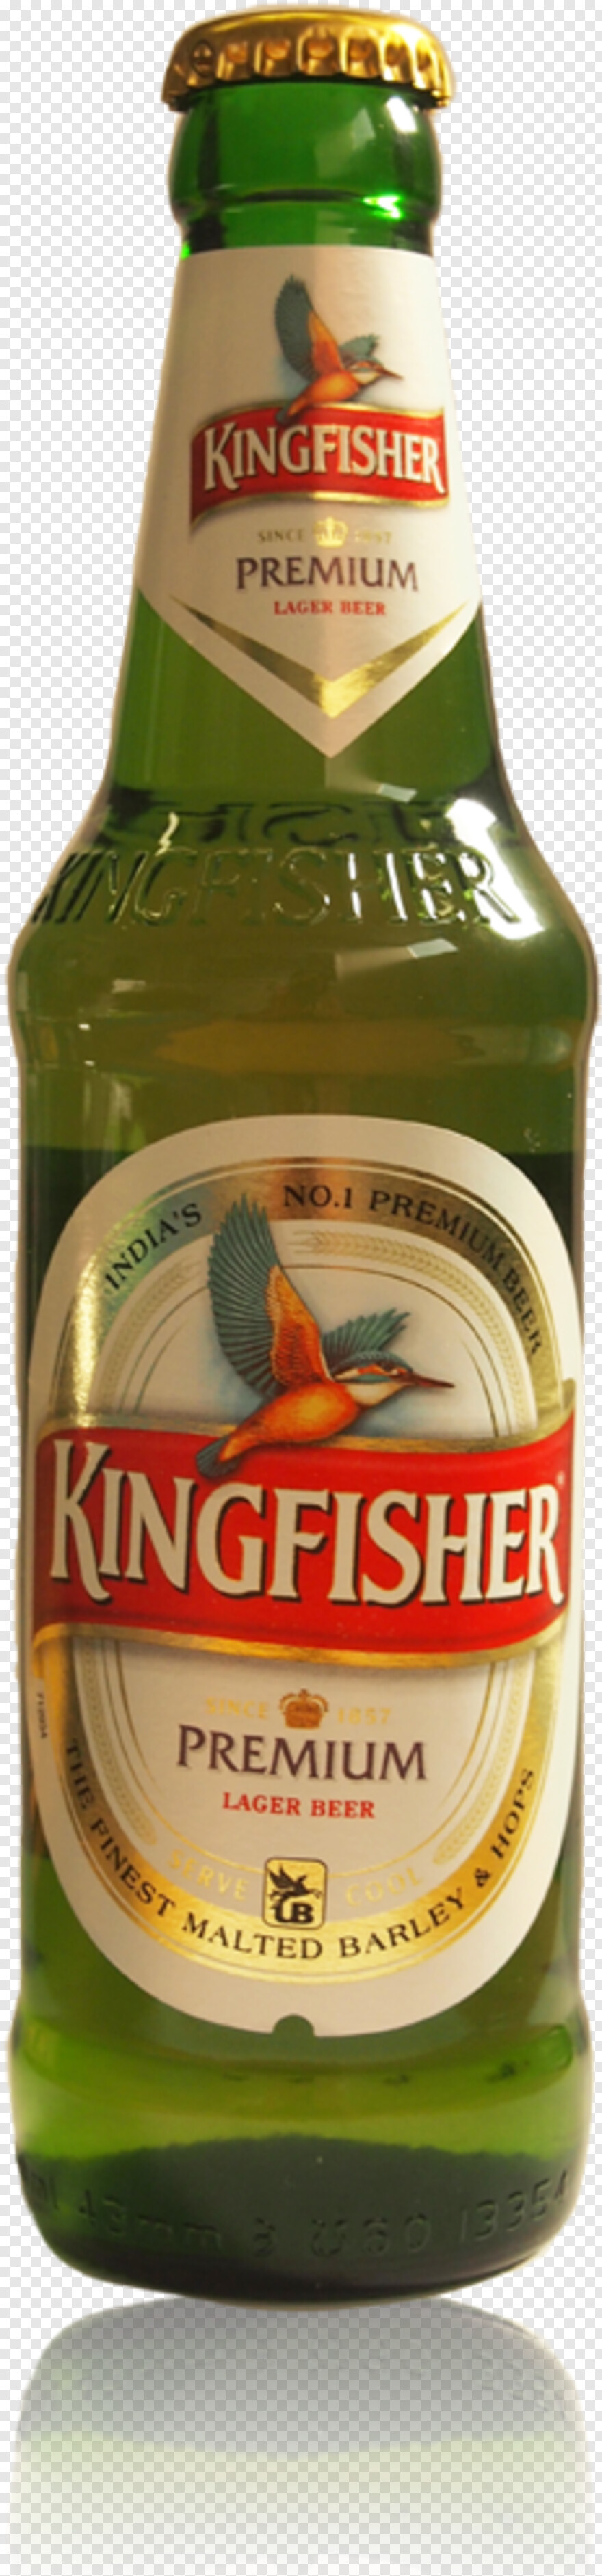 kingfisher-logo # 380679